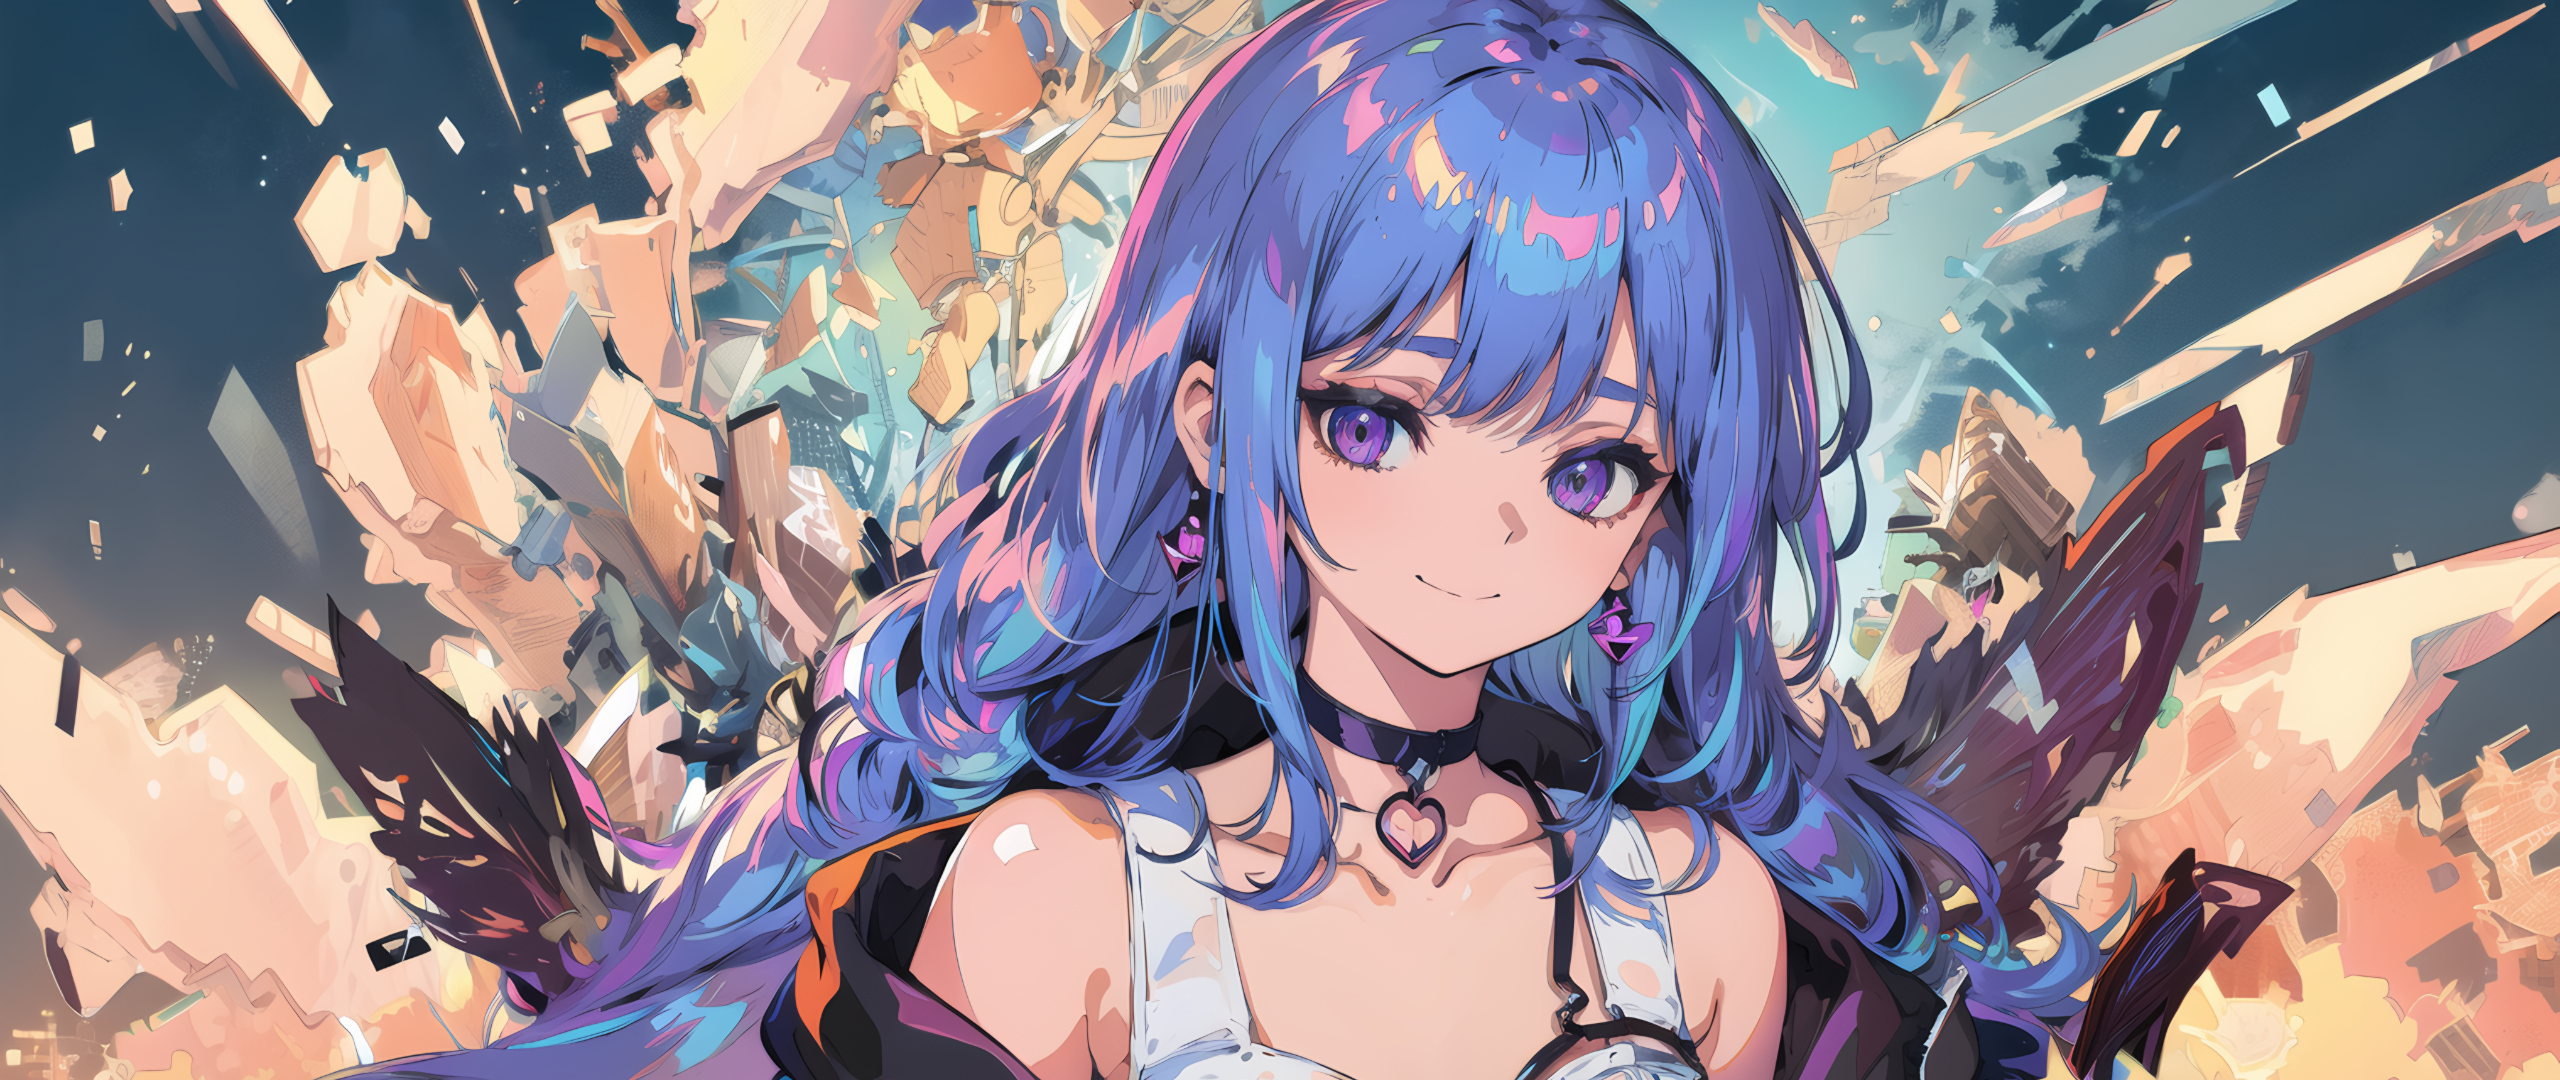 Ai Art Anime Girls Choker Looking At Viewer Pastel Blue Hair Bangs Earring Smiling 2560x1080